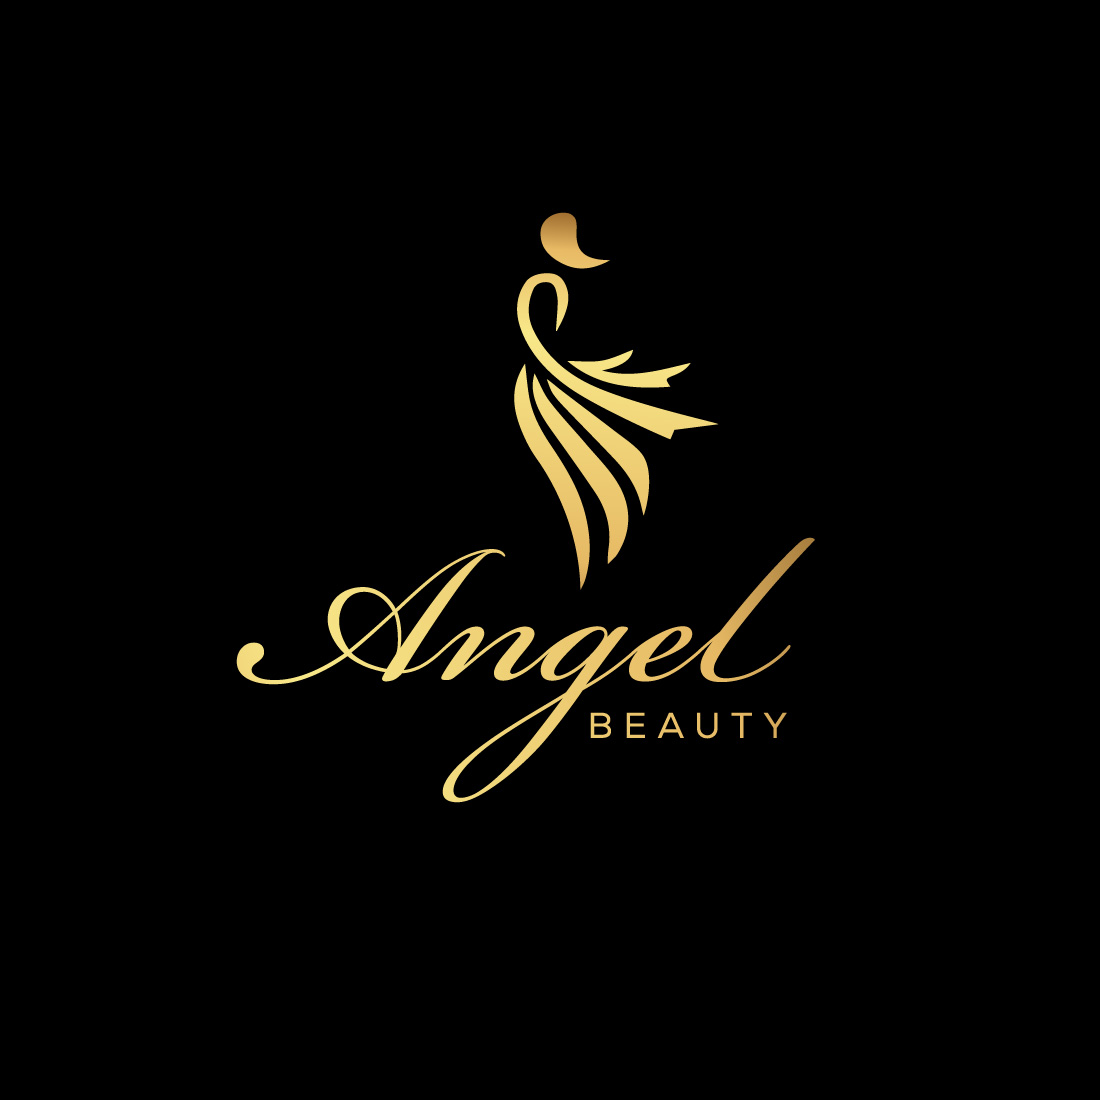 Angle Beauty, Fashion Related Logo cover image.